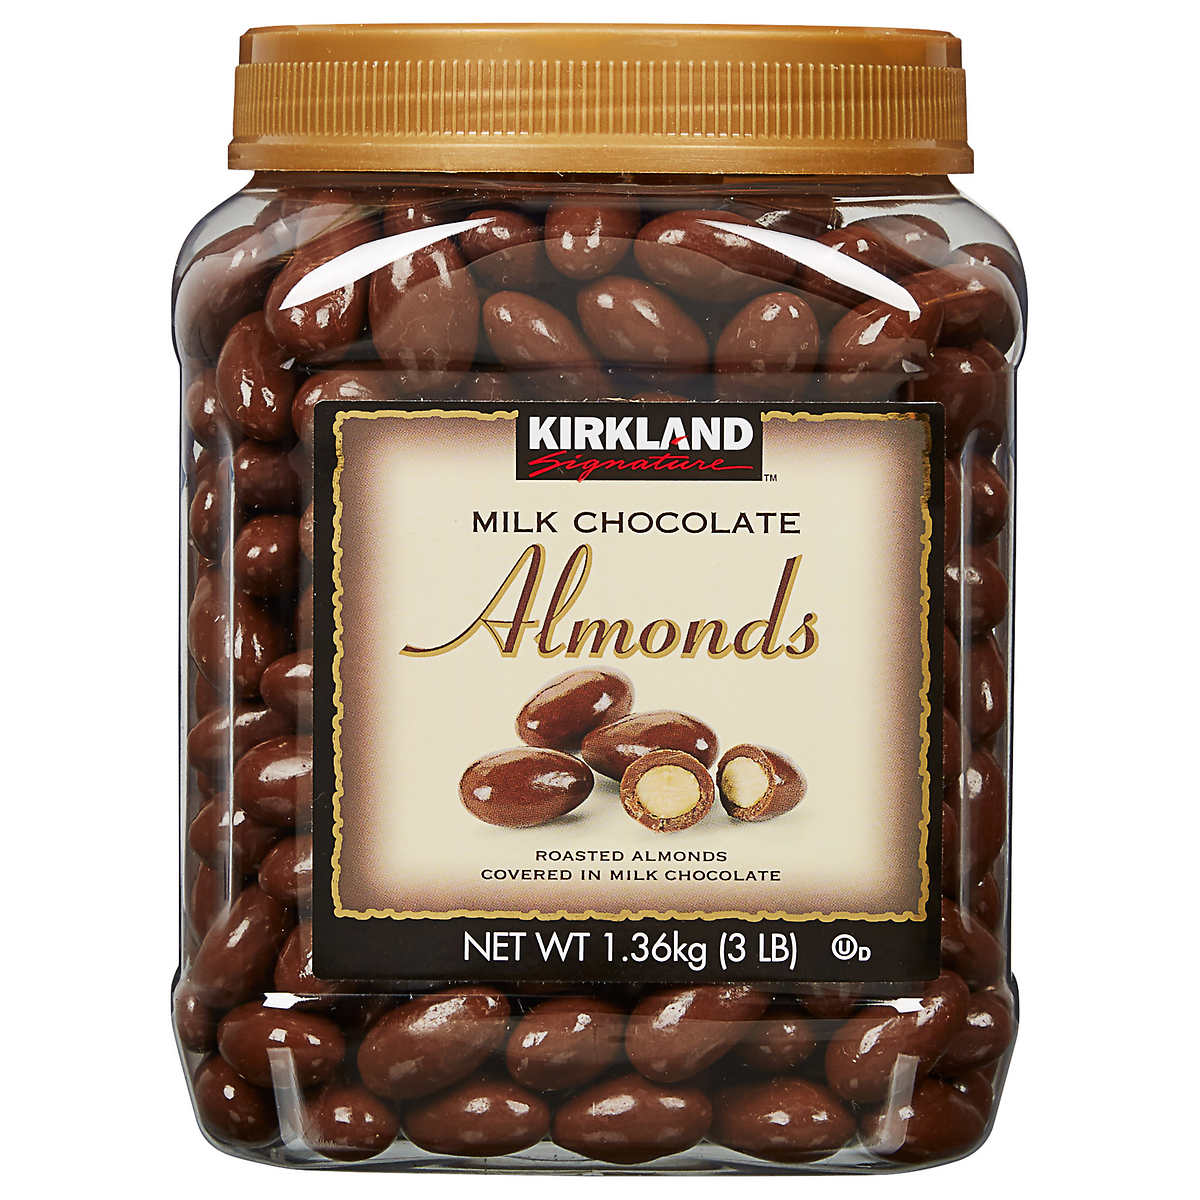 Kirkland Signature Almonds Milk Chocolate, 3 lb